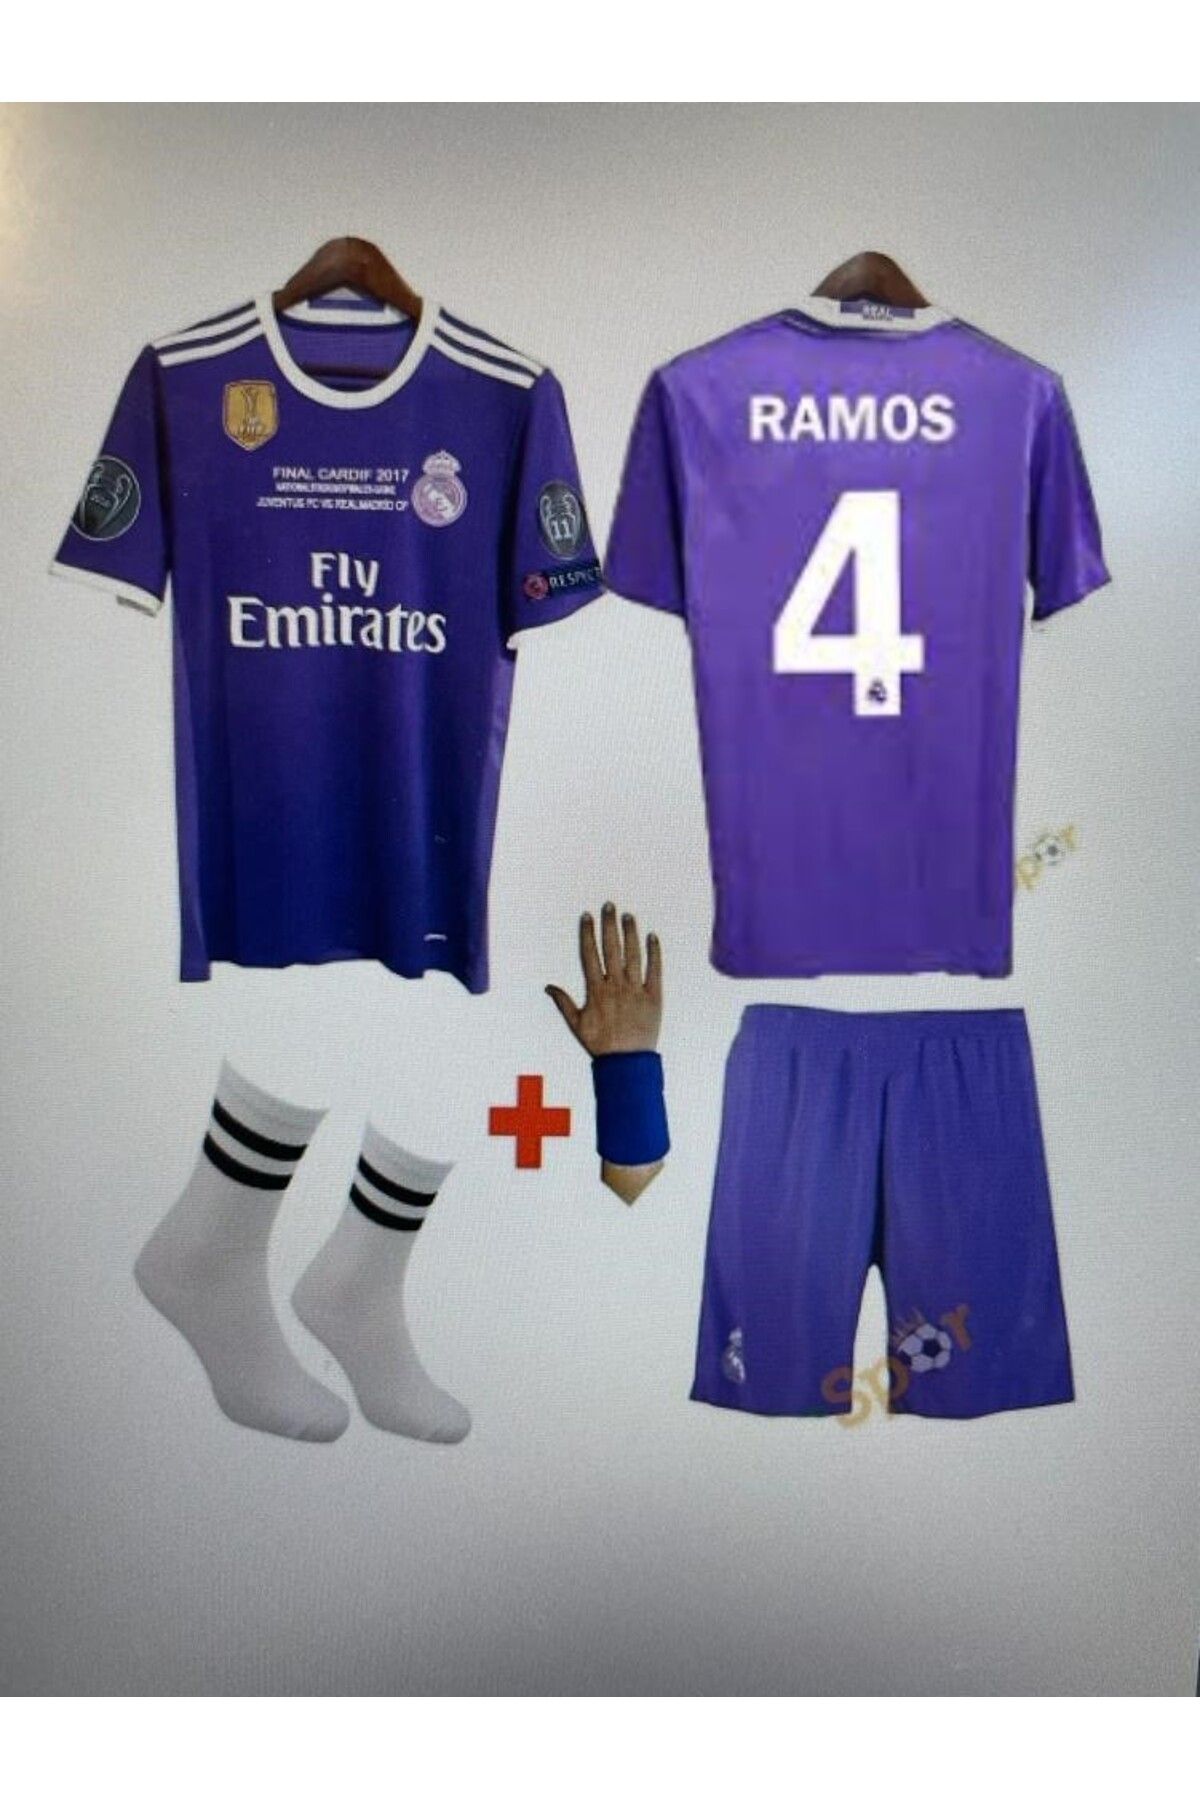 yenteks Real Madrid Sergio Ramos Çocuk Futbol Forması Takımı 4 Lü Set Cardif 2017/2018 Sezon